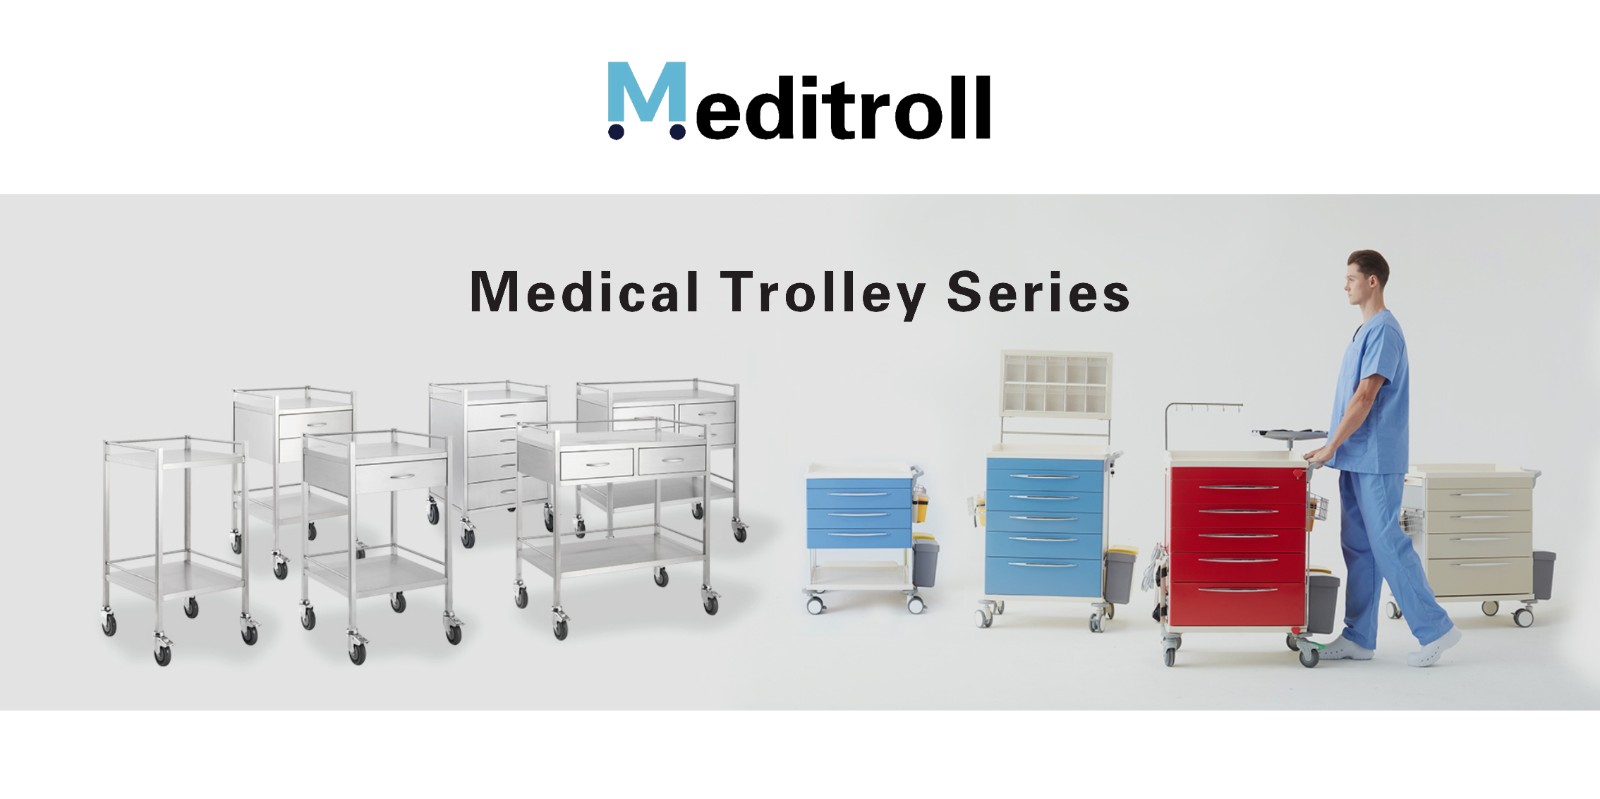 Medicine trolley